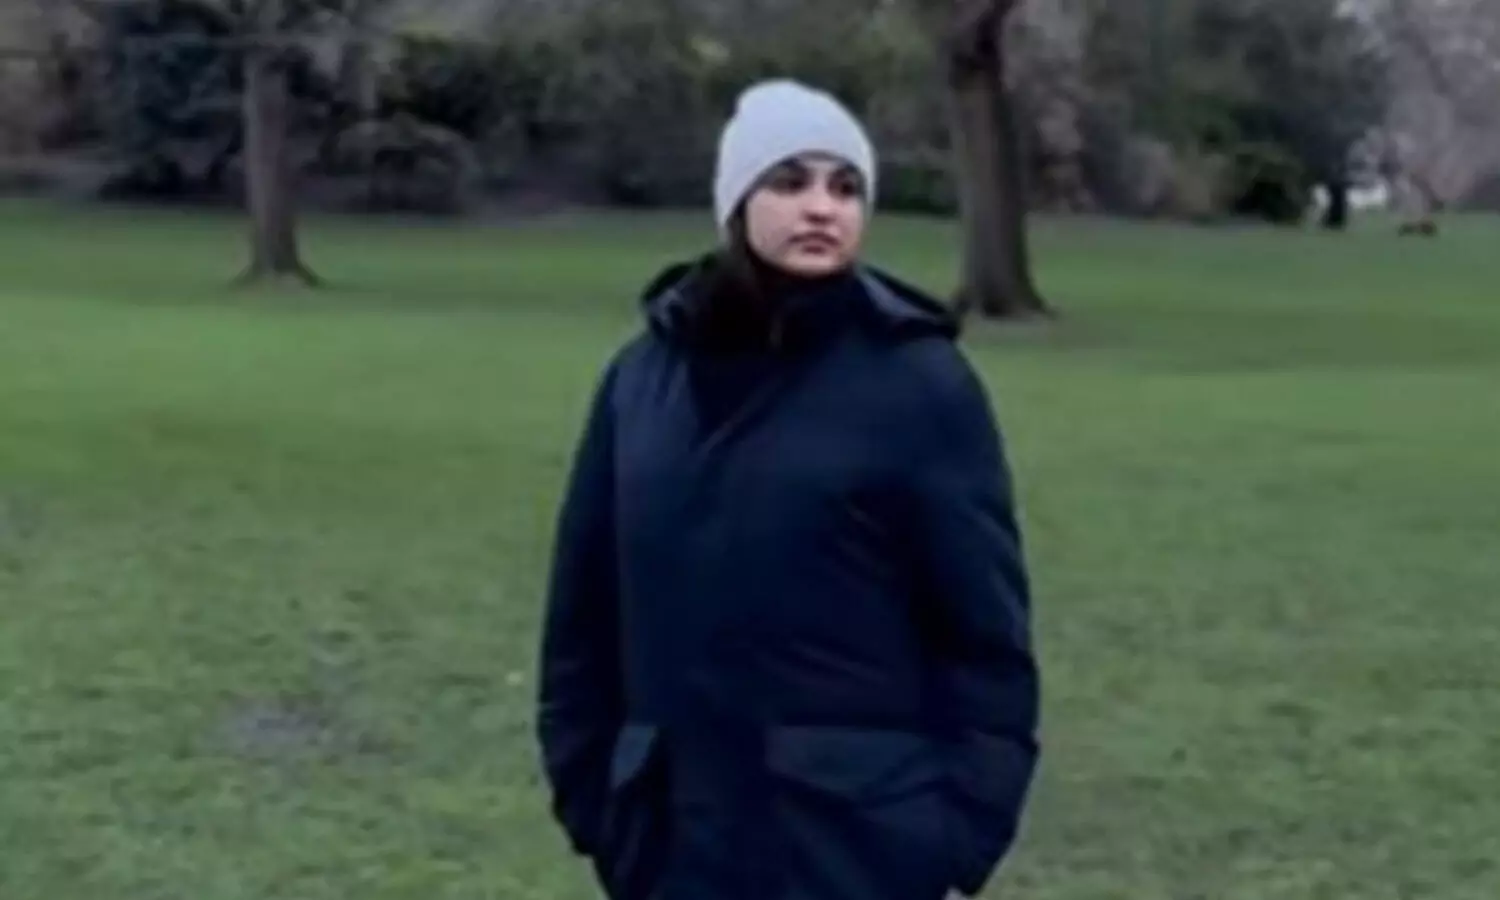 Parineeti Chopra takes a stroll in London park: Miles to go before I sleep